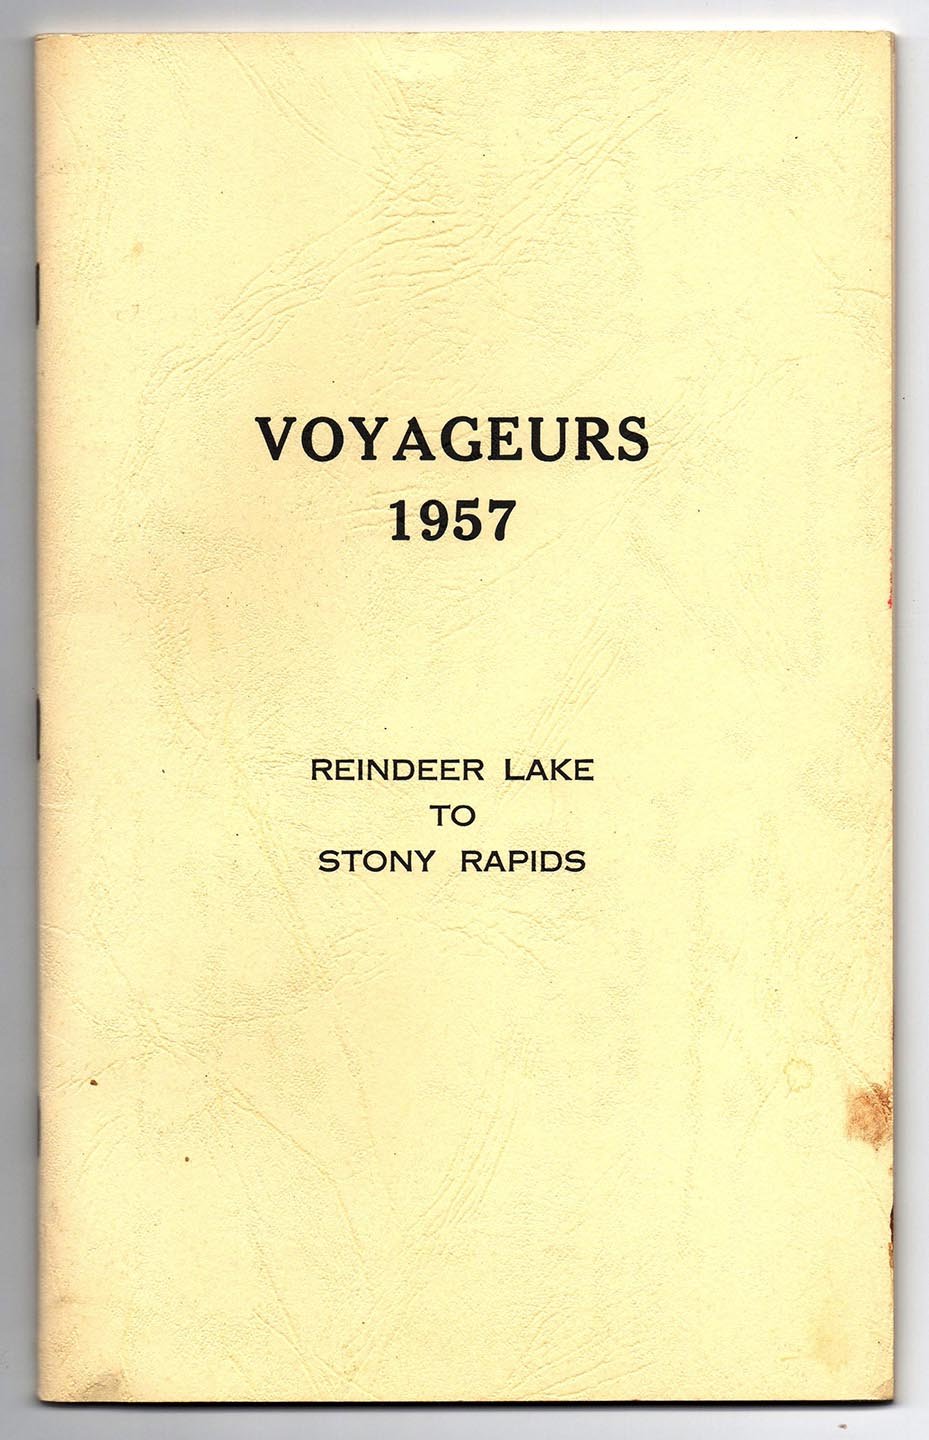 Voyageurs 1957: Reindeer Lake to Stony Rapids